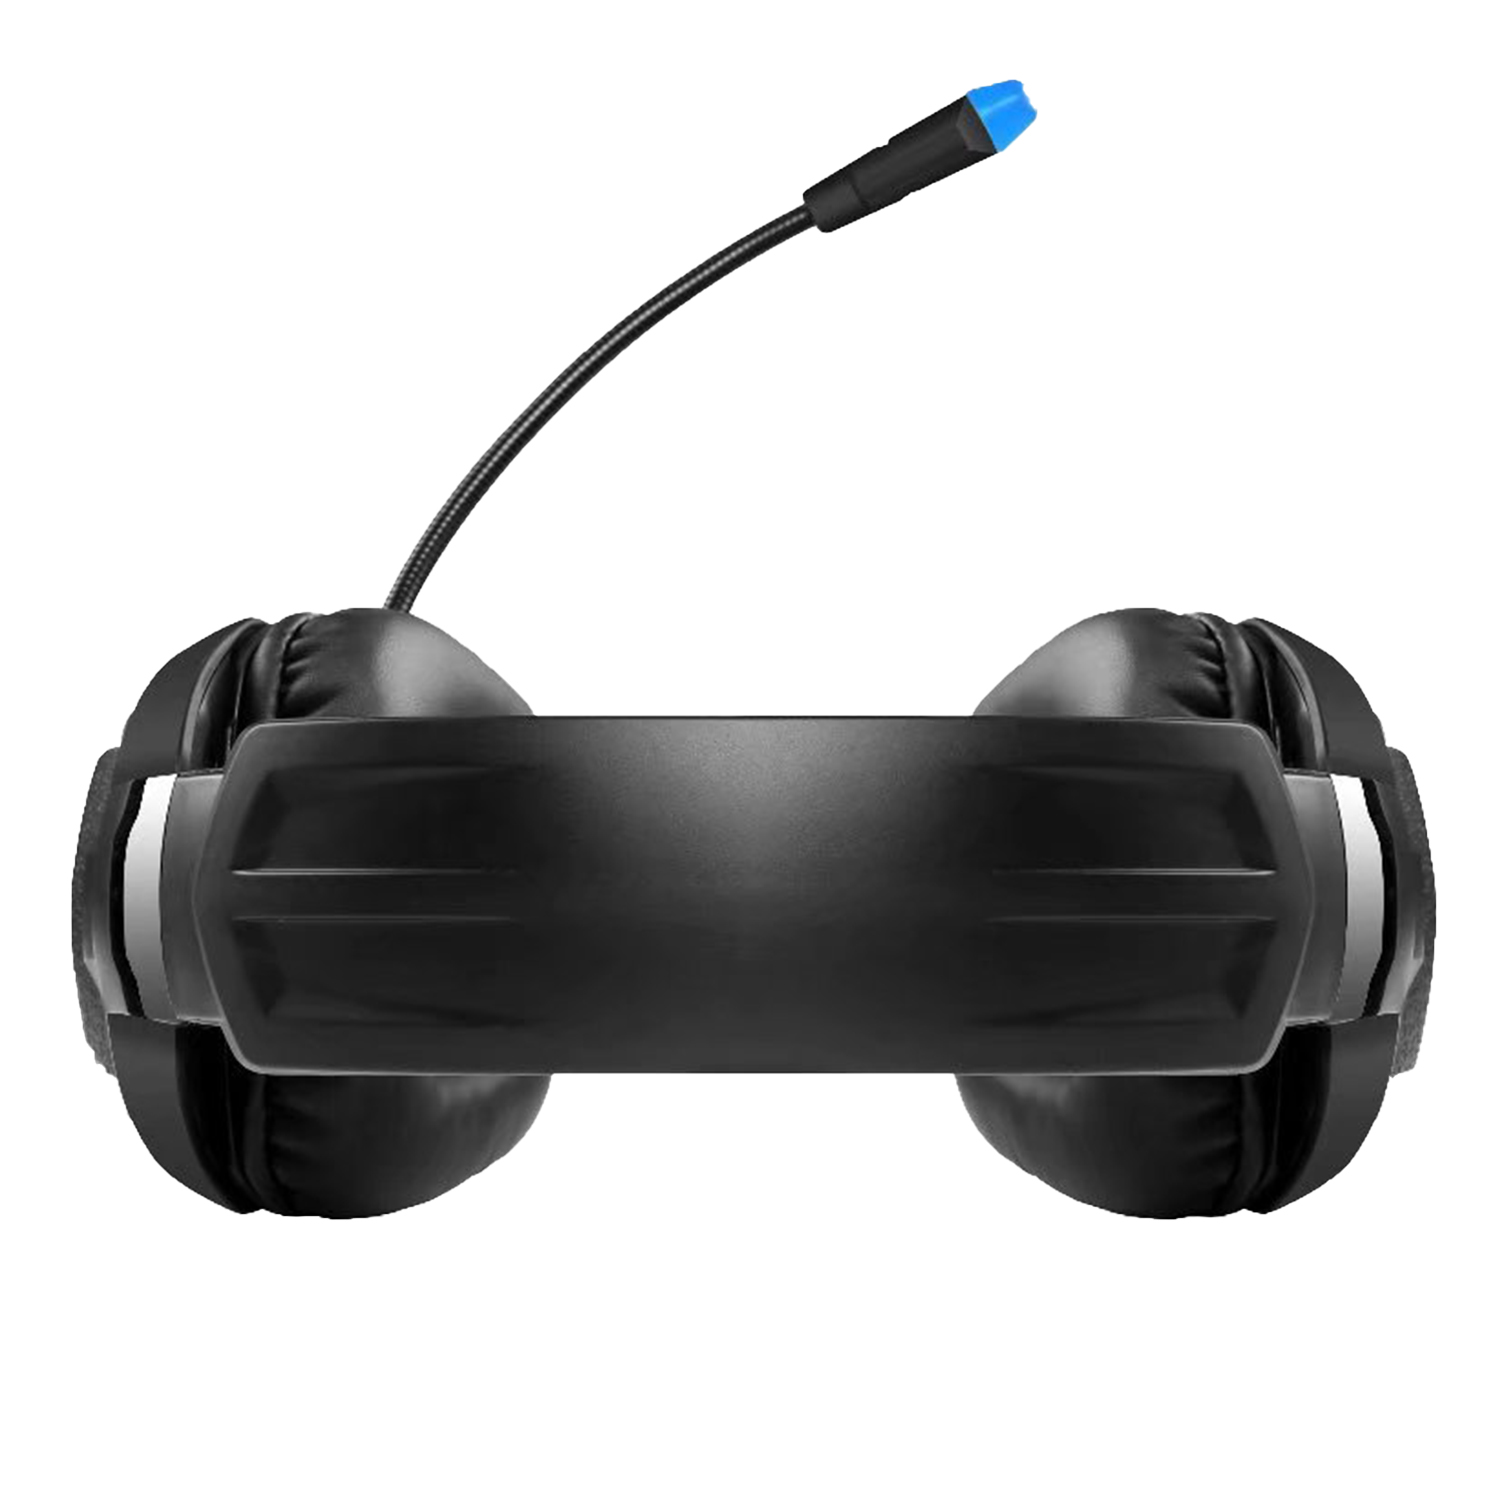 Fashion Virtual 7.1 Gaming Headphone USB LED Professional Recording Studio Cheap USB Headset with Microphone USB Plug for PC PS4